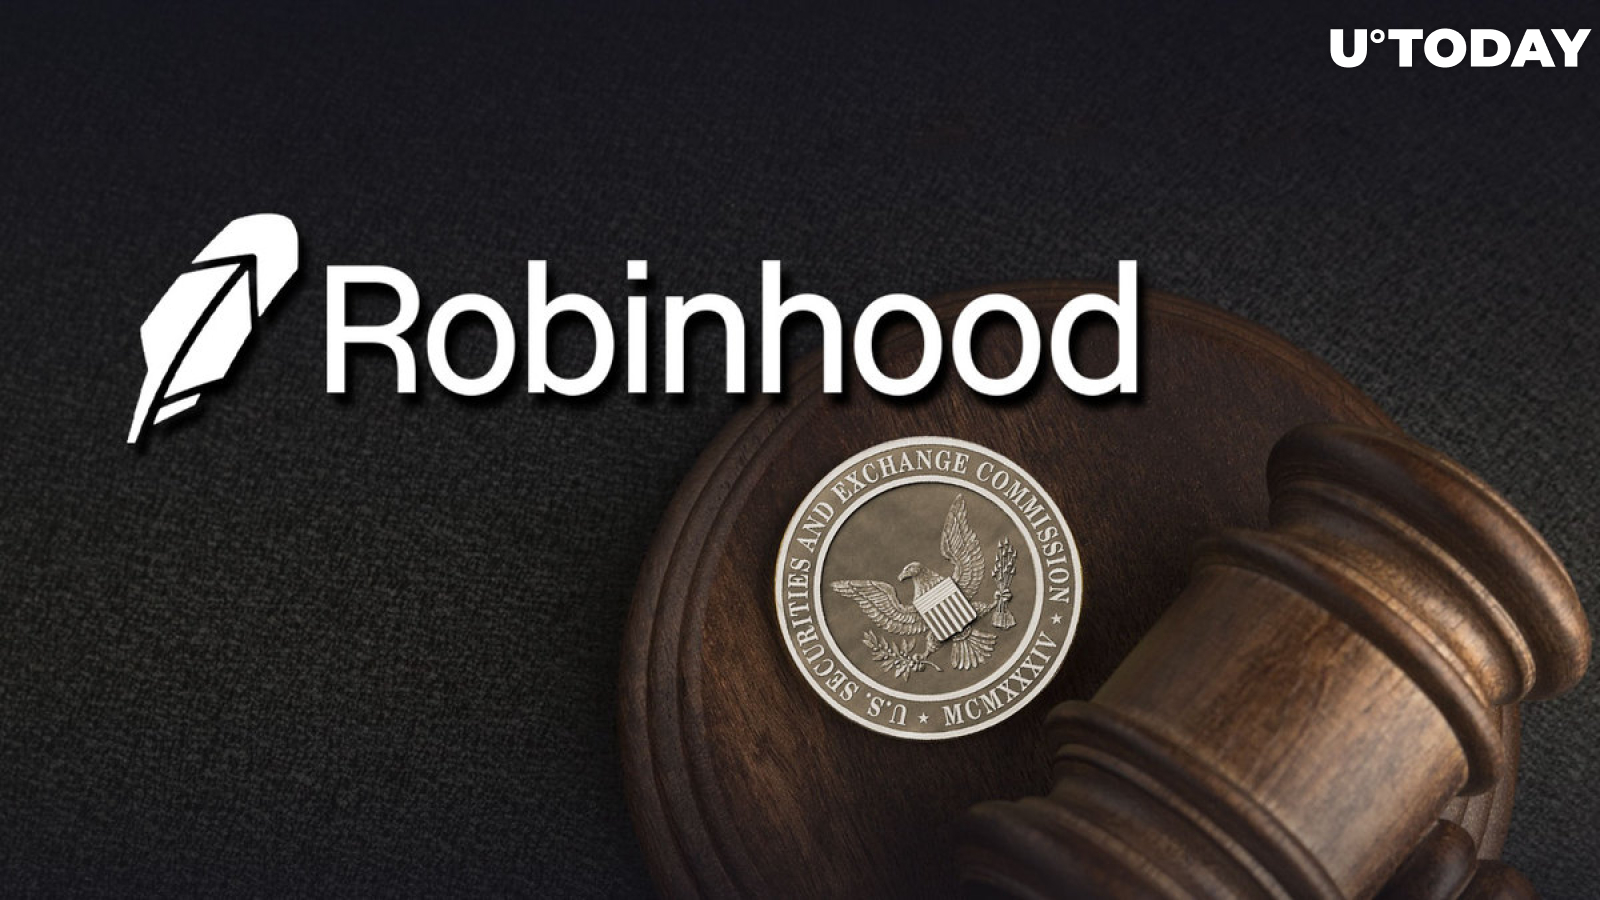 Robinhood CEO Breaks Silence Amid SEC Drama